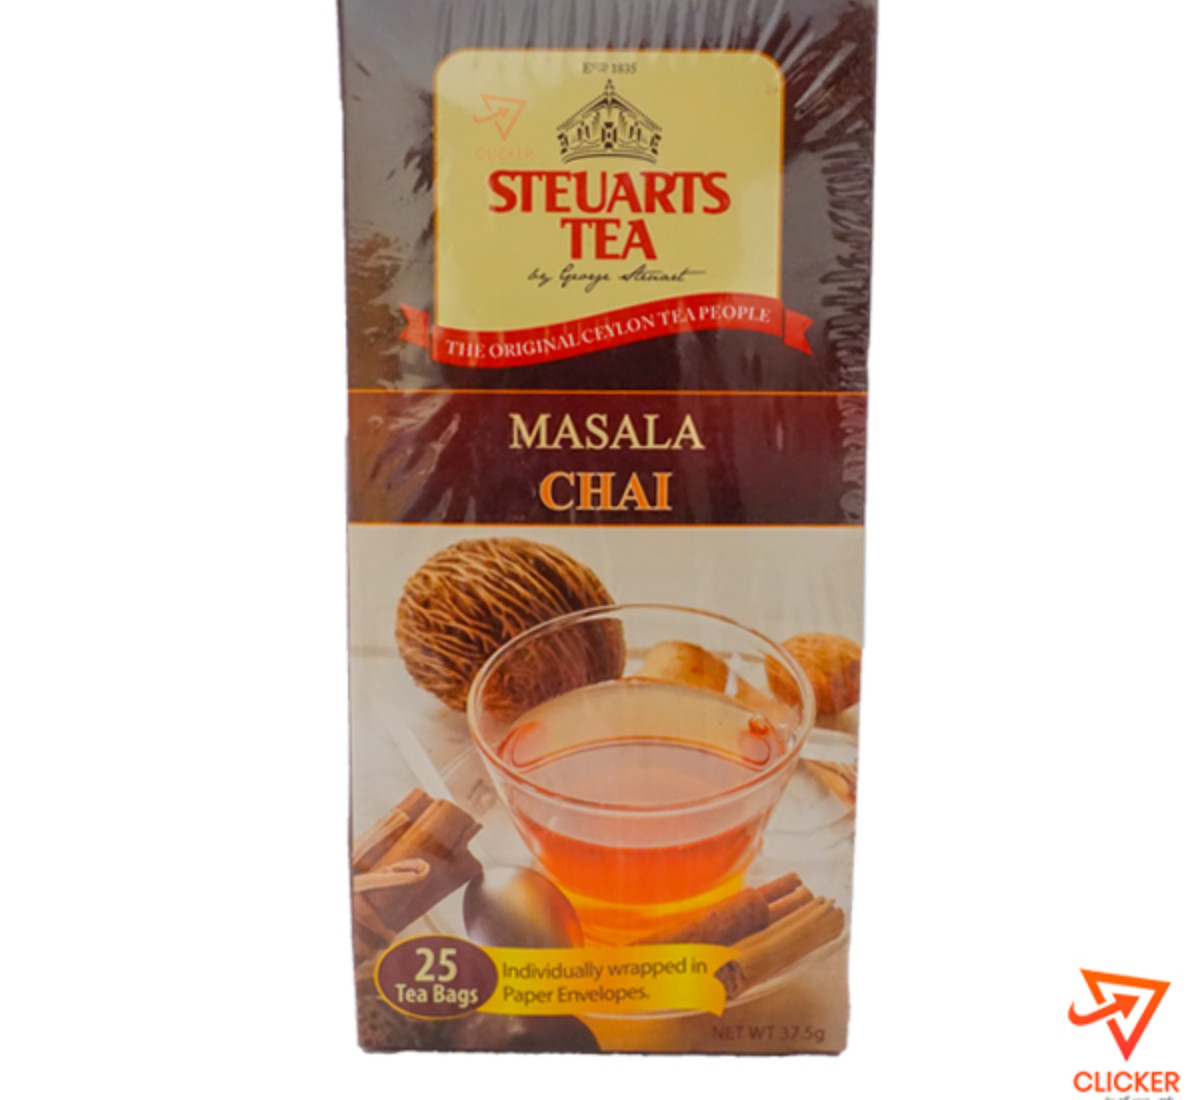 Clicker product 37.5g GEORGE STEURARTS tea masala tea(25tea bags) 935